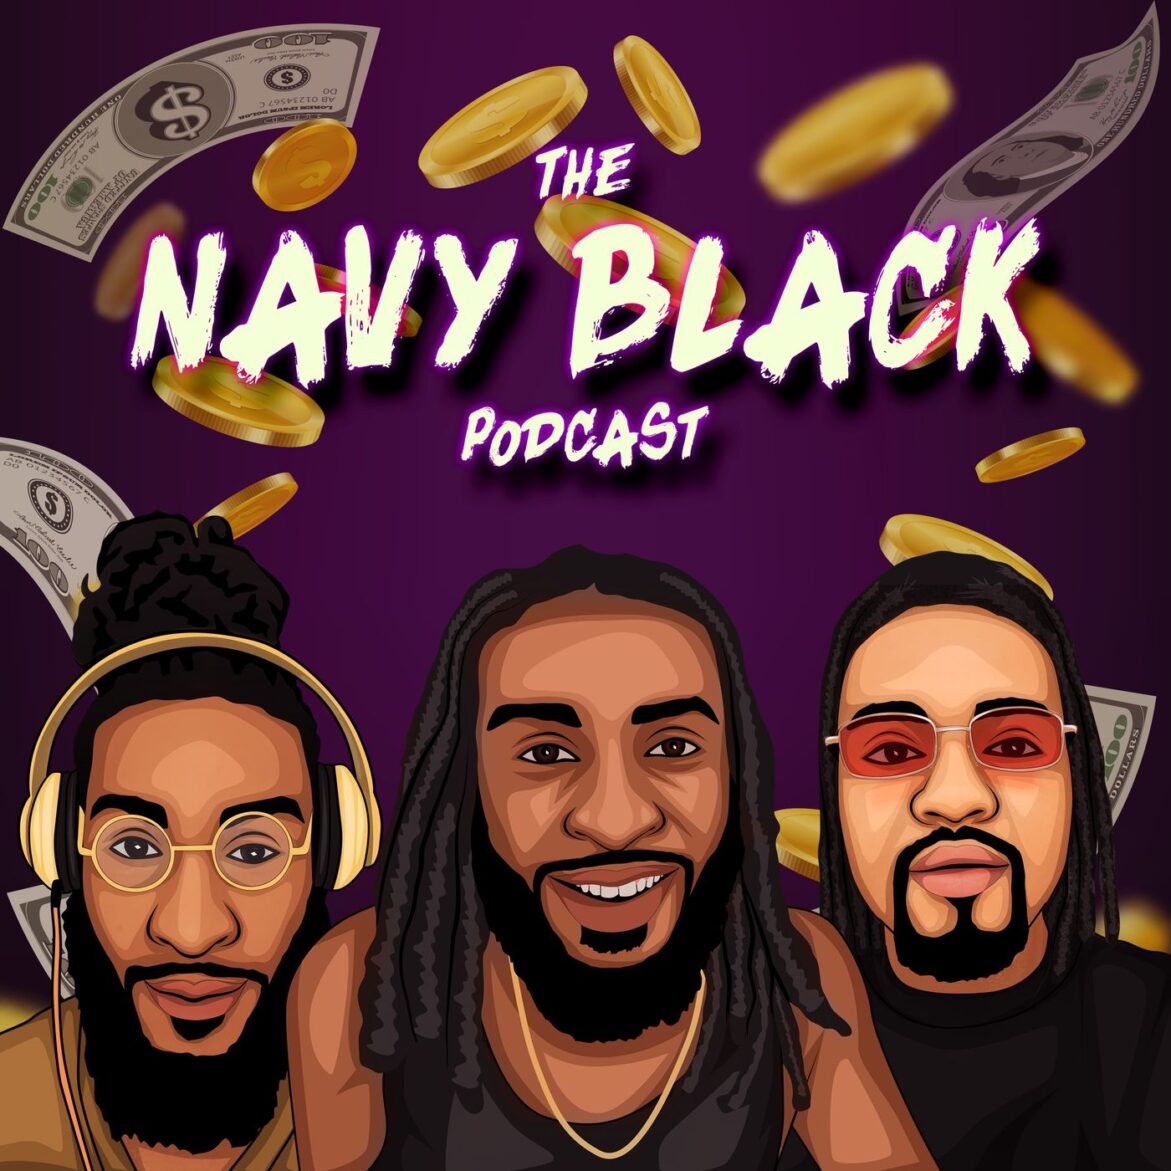 Black Podcasting - "Go DJ"